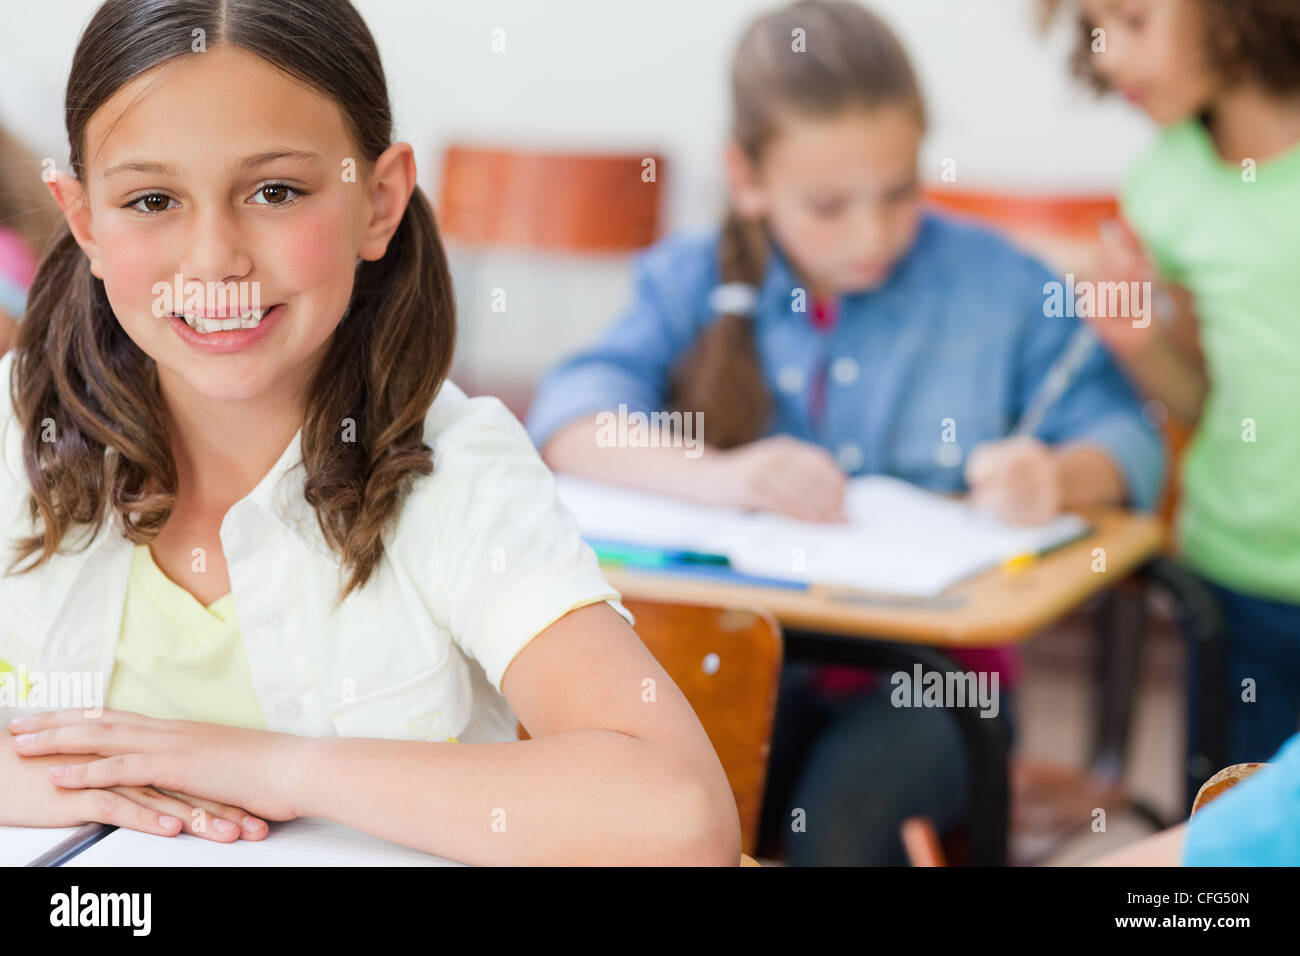 Smiling girl attending class Stock Photo